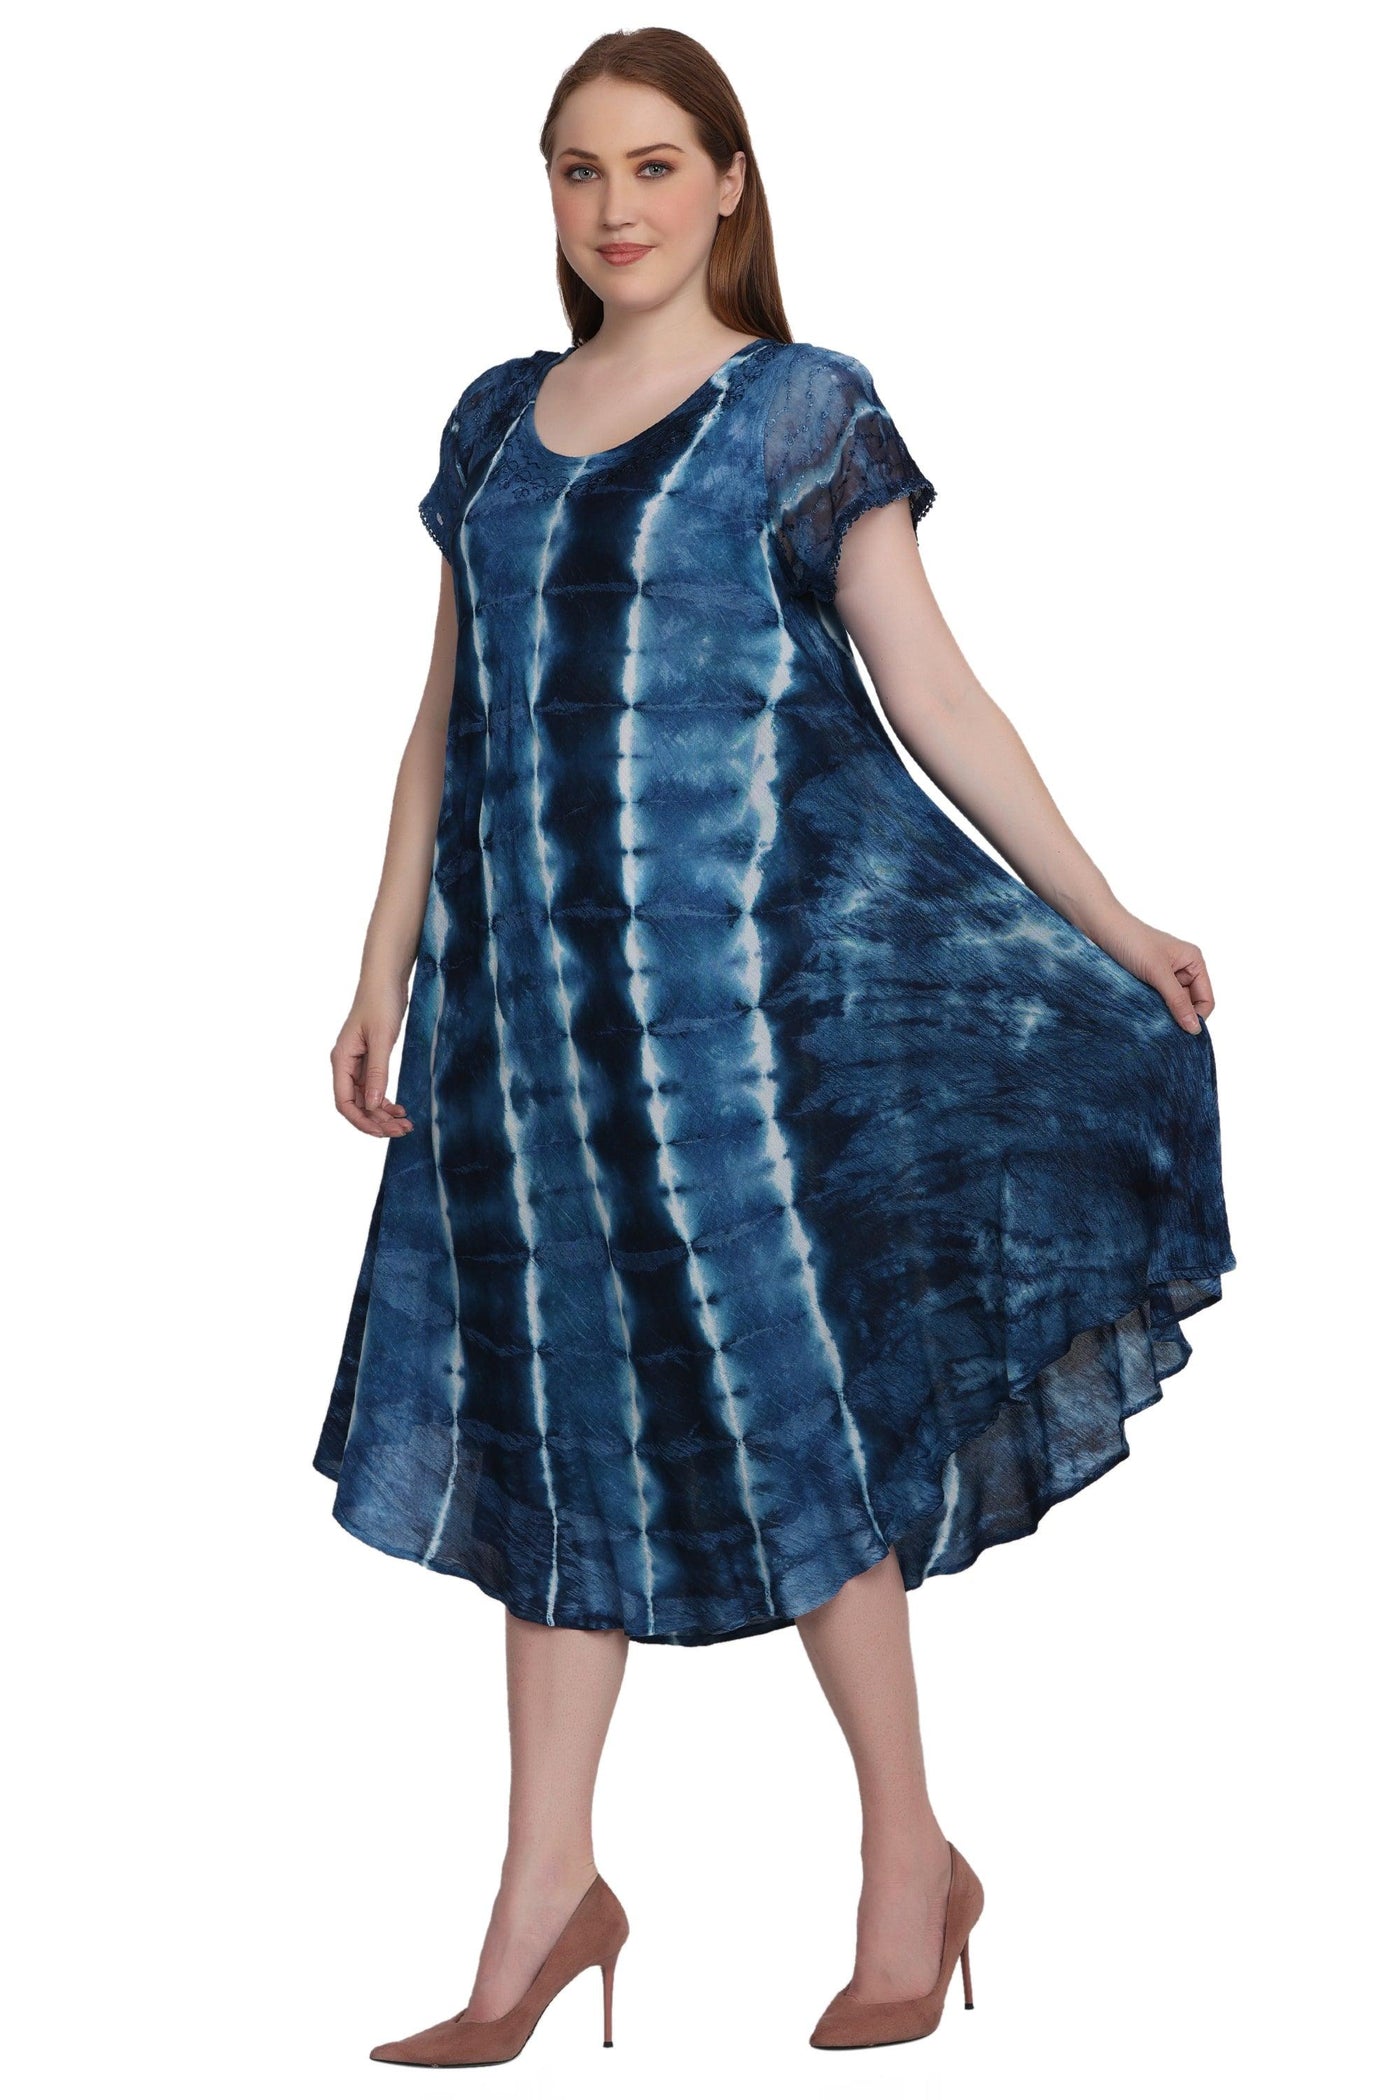 Cap Sleeve Tie Dye Dress 522185-SLV  - Advance Apparels Inc